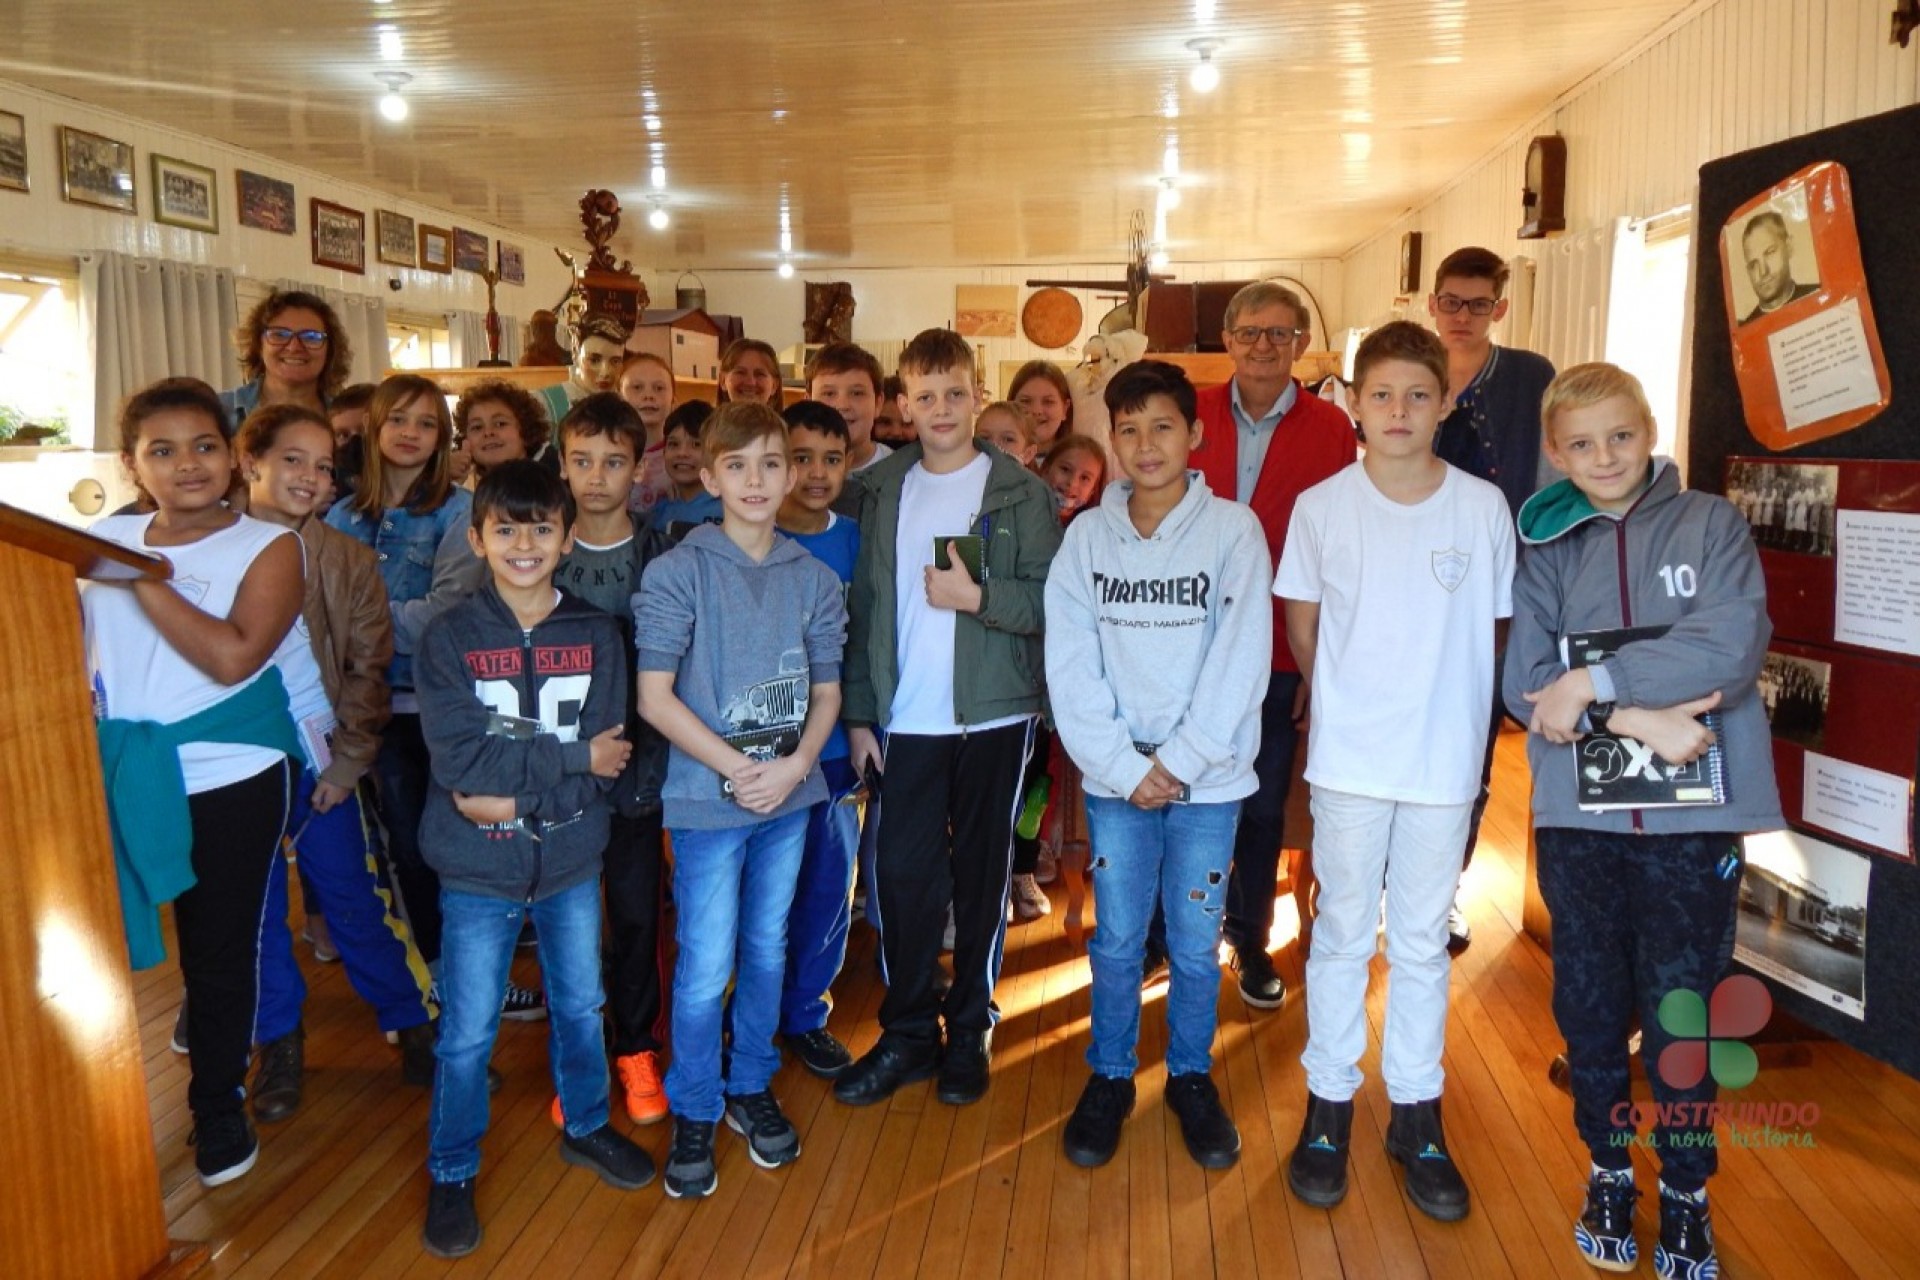 Museu Municipal recebe visita de alunos nesta segunda-feira em Missal